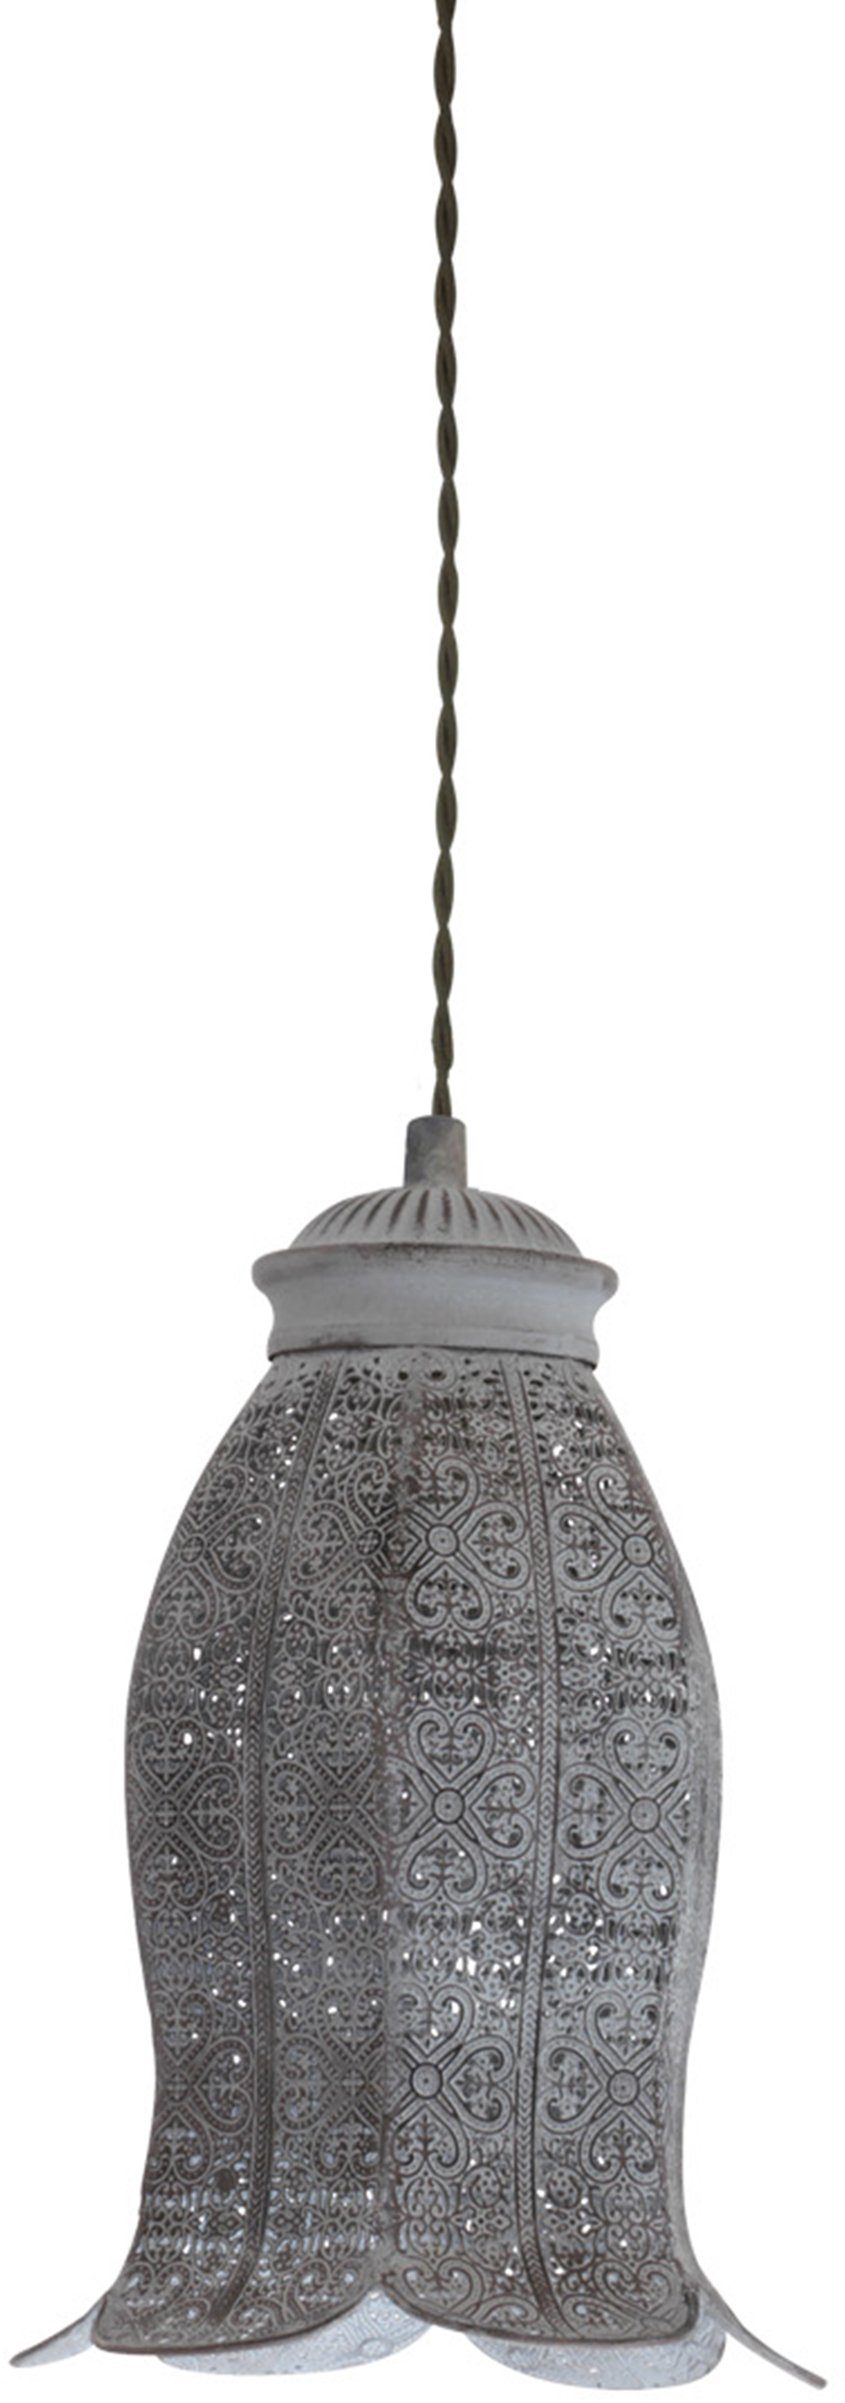 EGLO Hanglamp Vintage Hanglicht, hanglamp